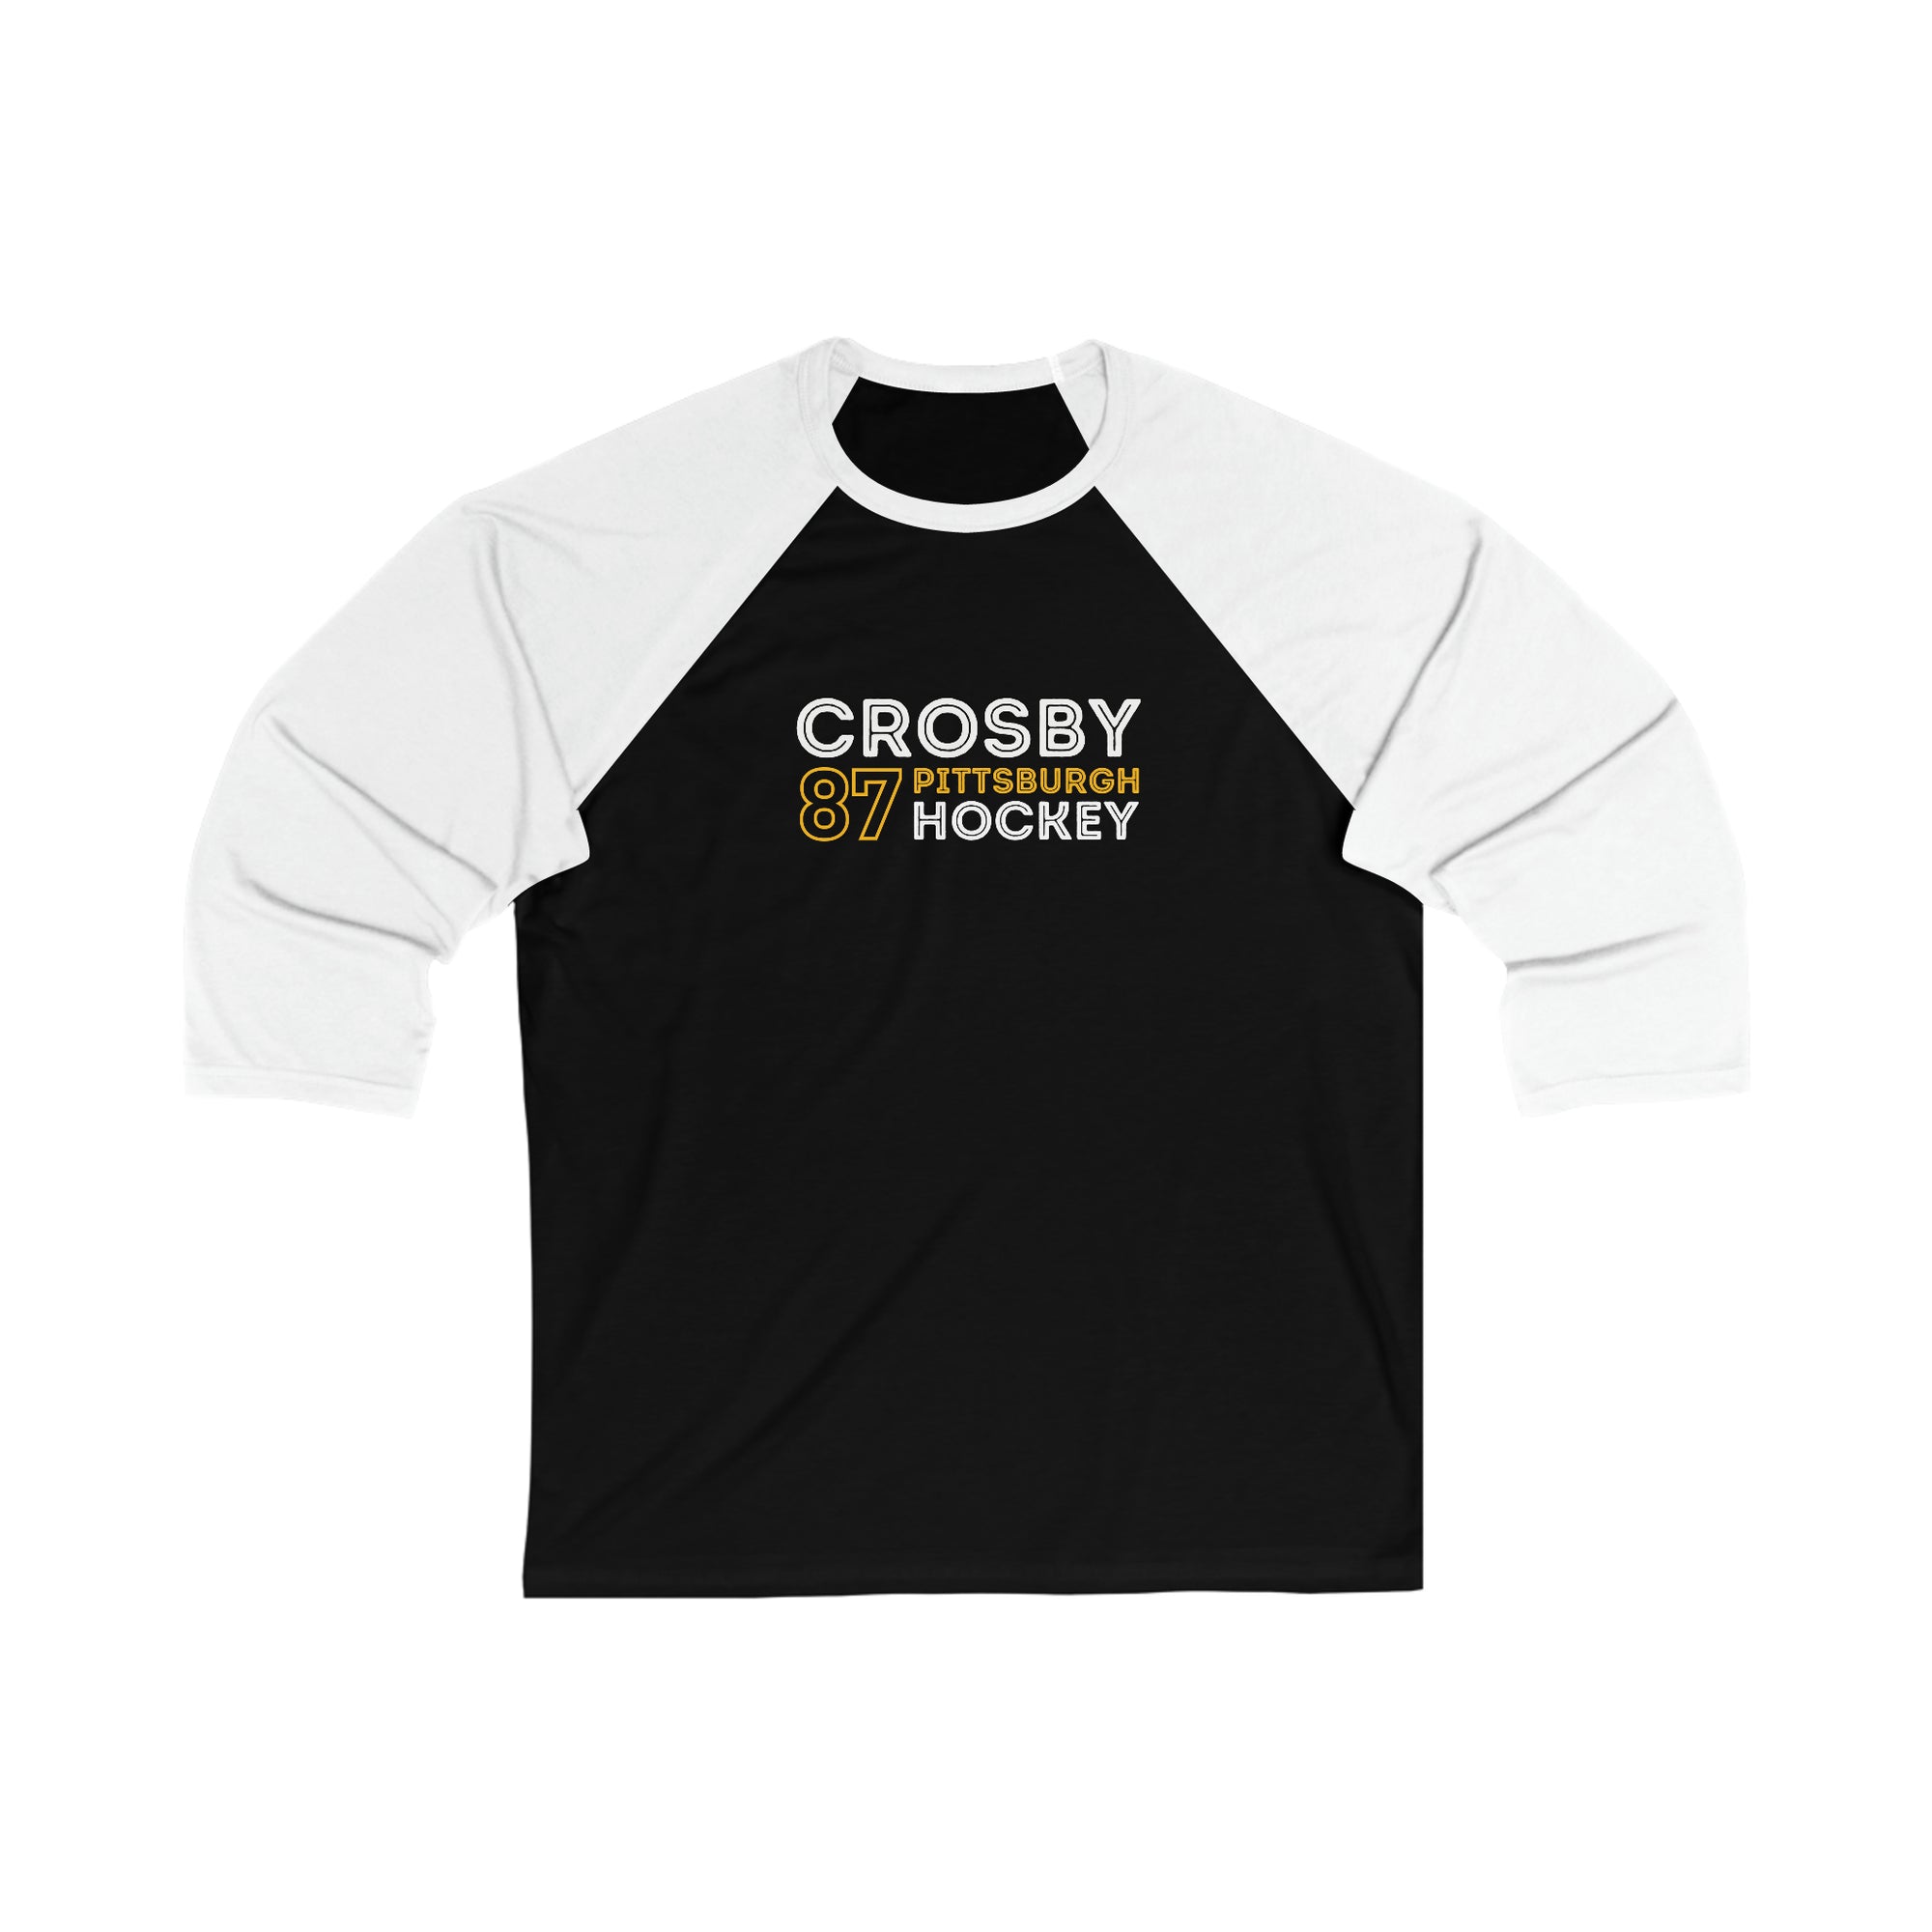 Crosby 87 Pittsburgh Hockey Grafitti Wall Design Unisex Tri-Blend 3/4 Sleeve Raglan Baseball Shirt